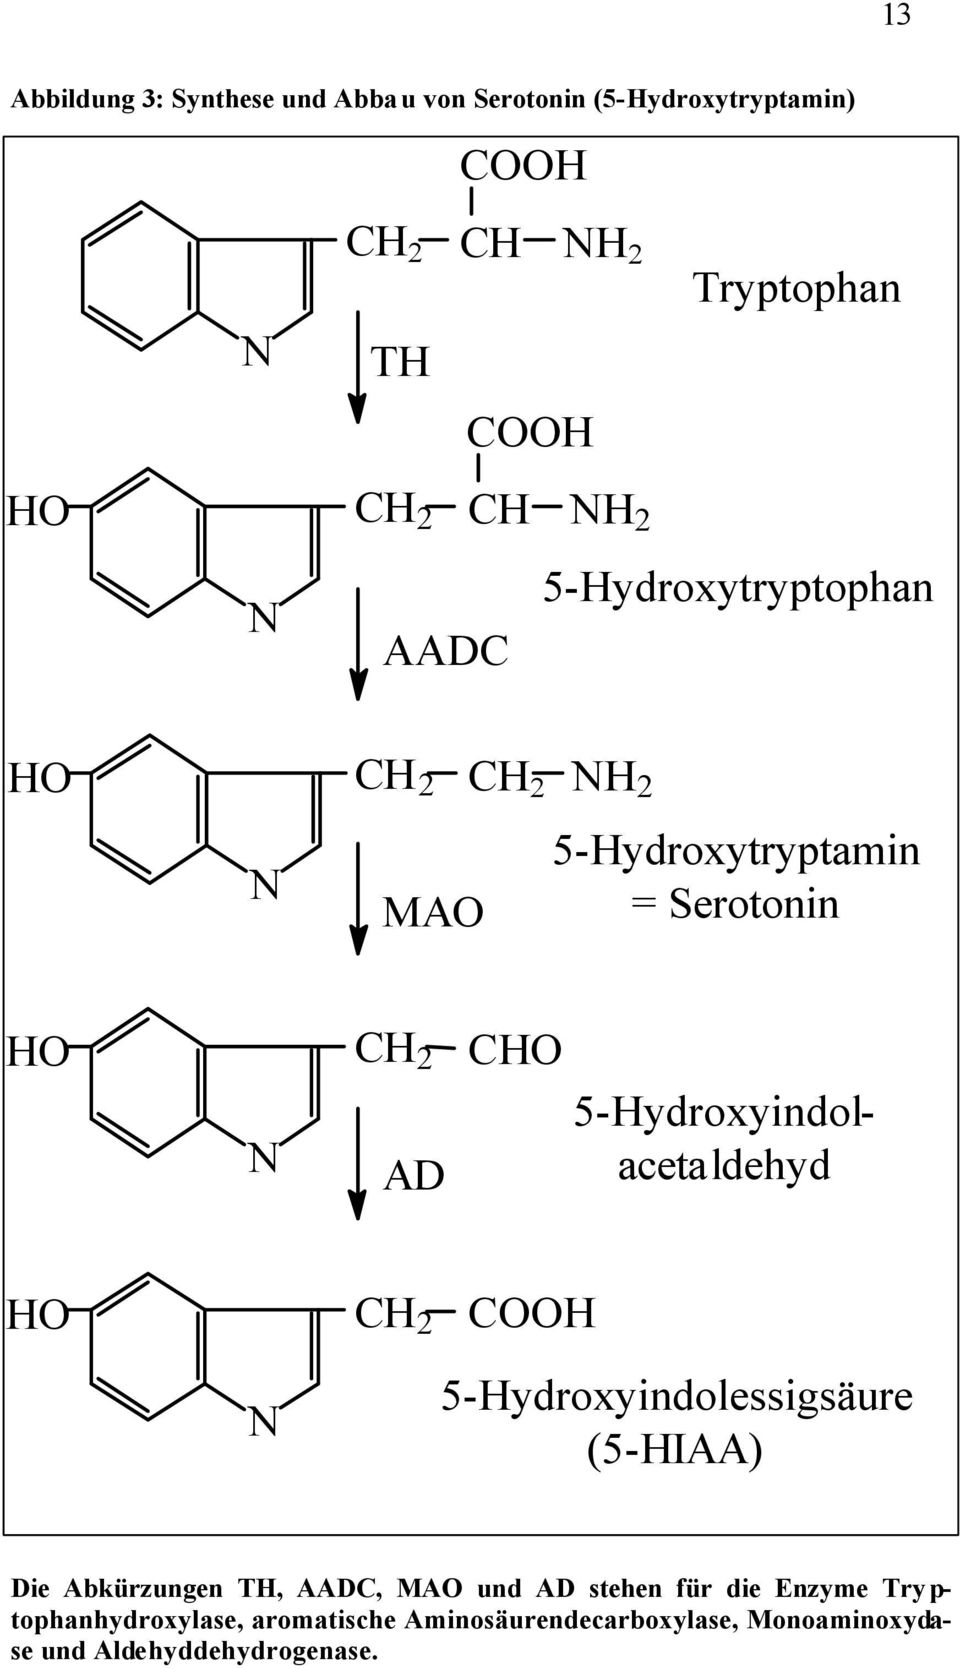 5-Hydroxyindolacetaldehyd HO CH 2 COOH N 5-Hydroxyindolessigsäure (5-HIAA) Die Abkürzungen TH, AADC, MAO und AD